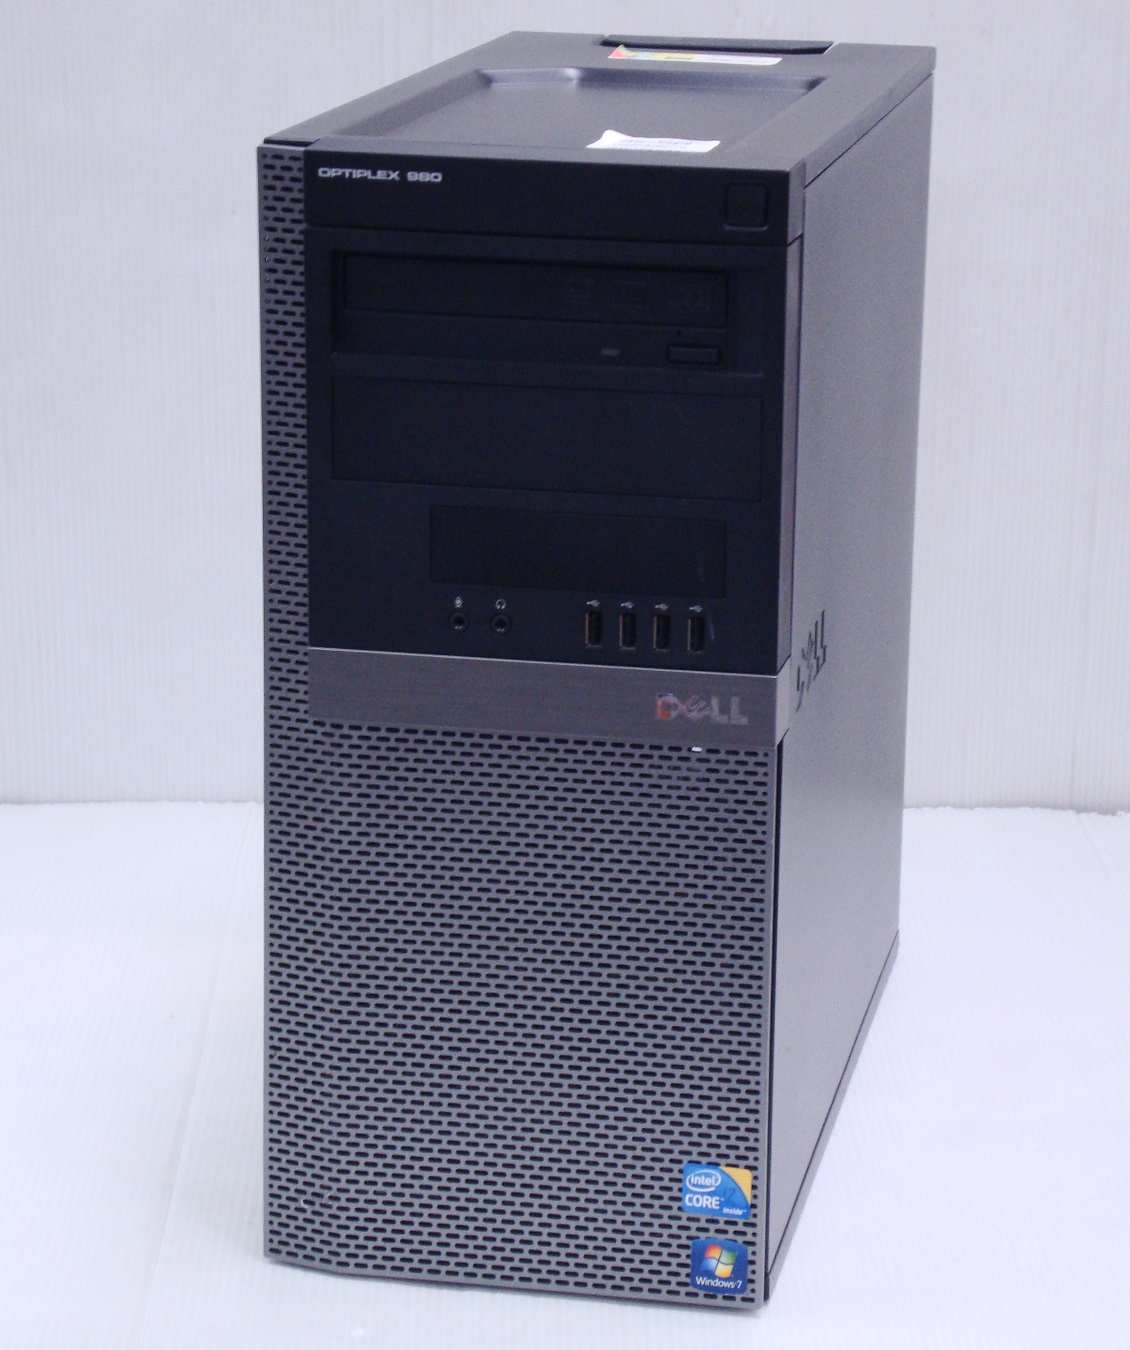 DELL OPTIPLEX980 CPU:Corei7 870 2.93GHz / メモリ:10GB / HDD:1TB / DVDスーパーマルチ /  Windows10Home64bit 中古デスクトップパソコンが激安販売中！ 中古パソコン市場